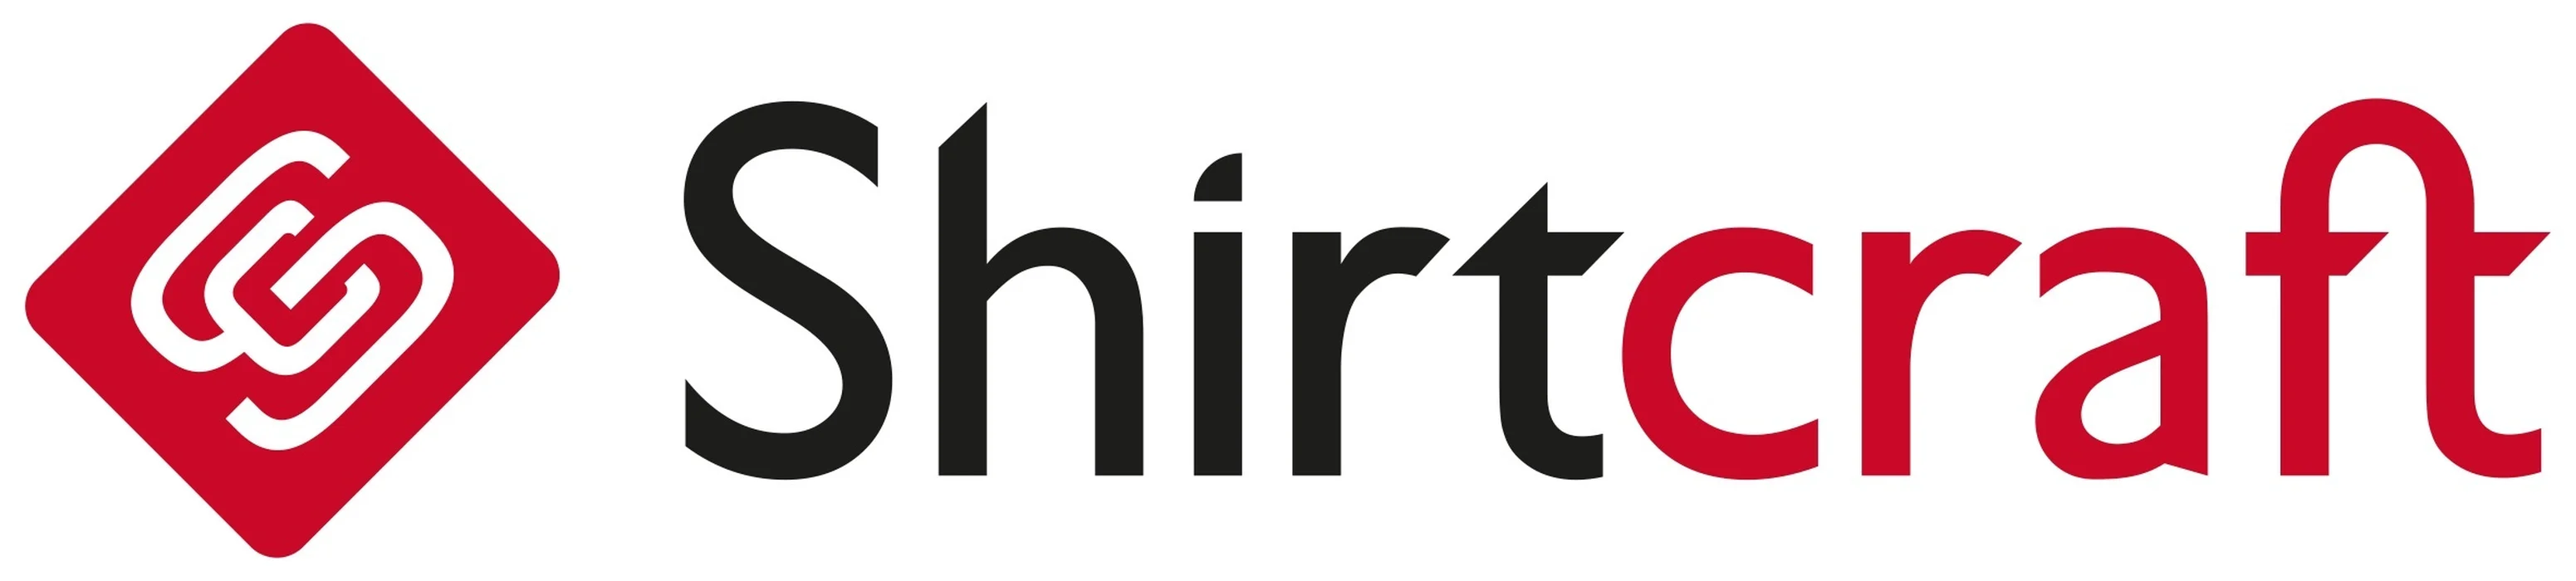 Shirtcraft-logo-no-strap